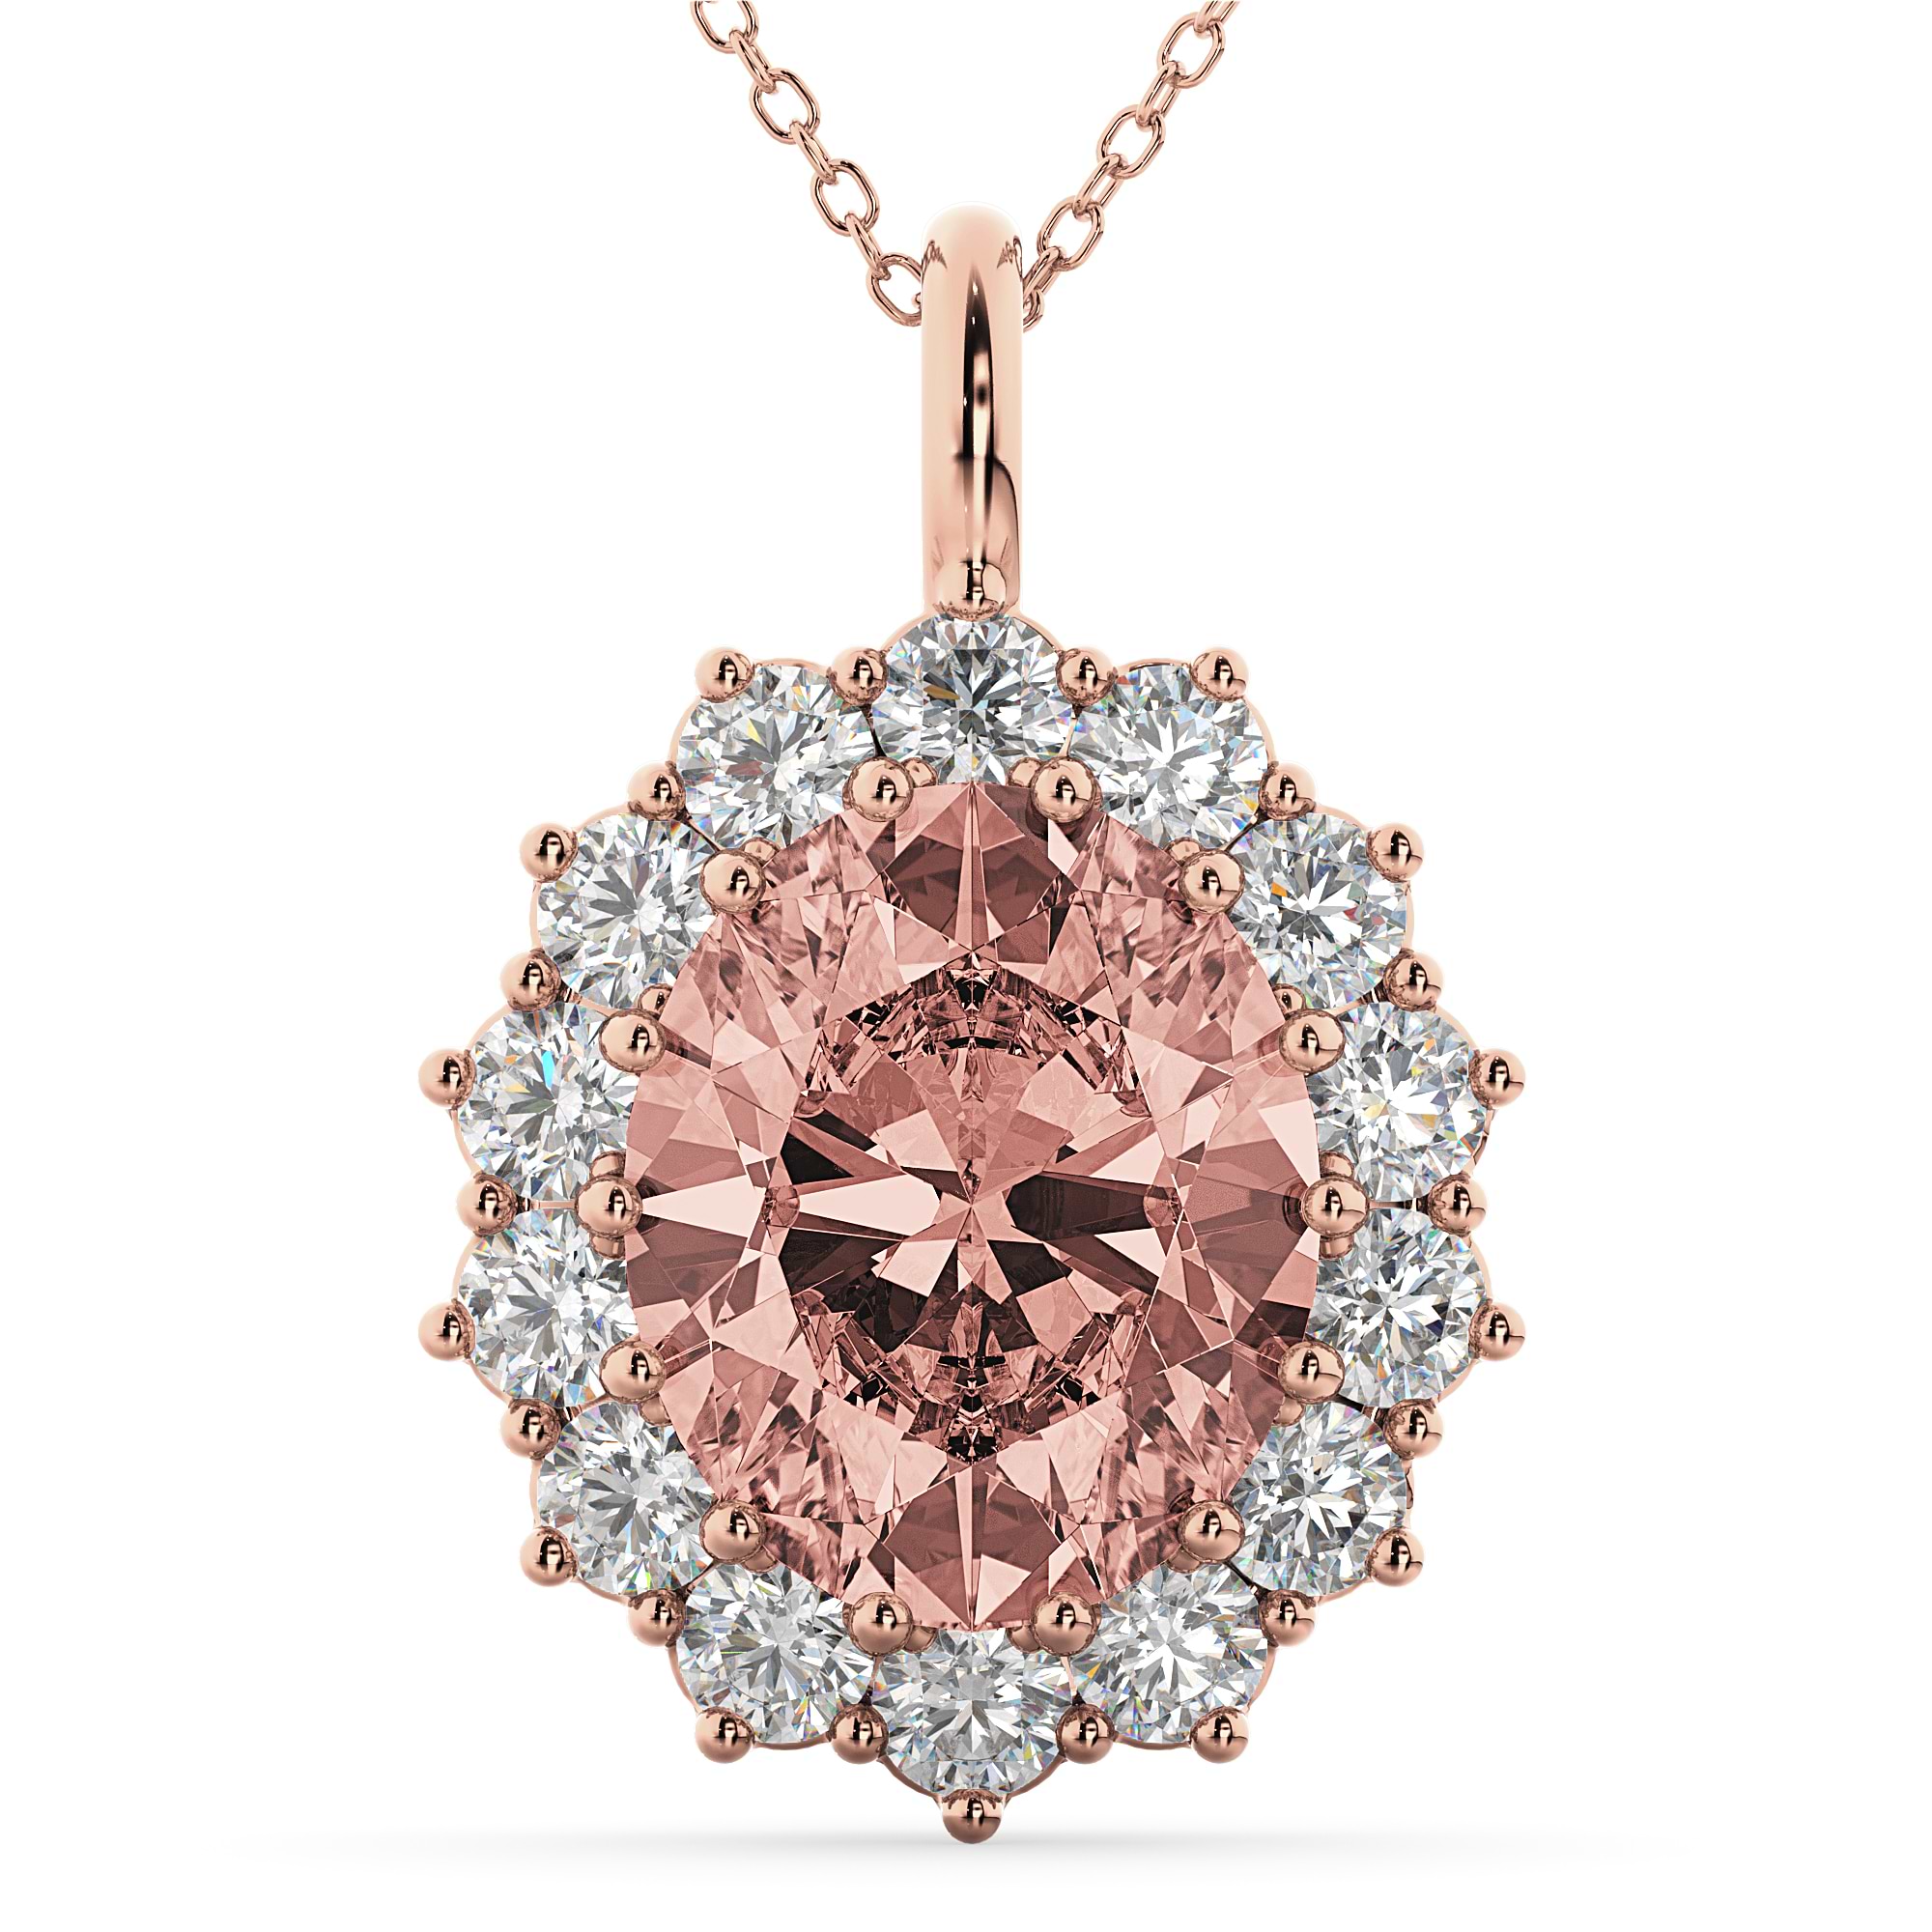 Oval Morganite & Diamond Halo Pendant Necklace 14k Rose Gold (6.40ct)